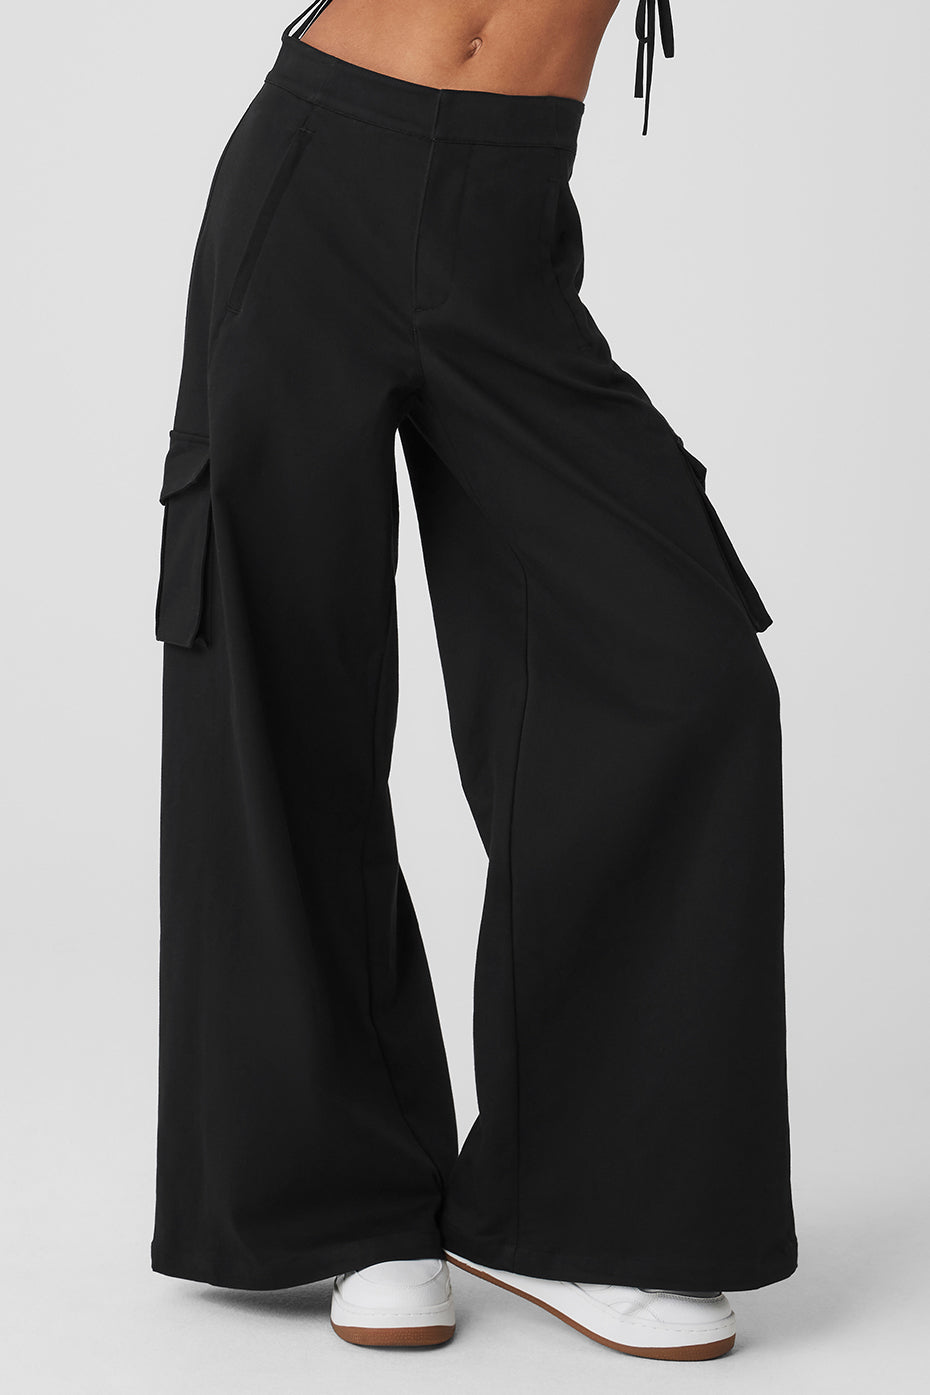 High-Waist Trouser Wide Leg Pants in Black by Alo Yoga